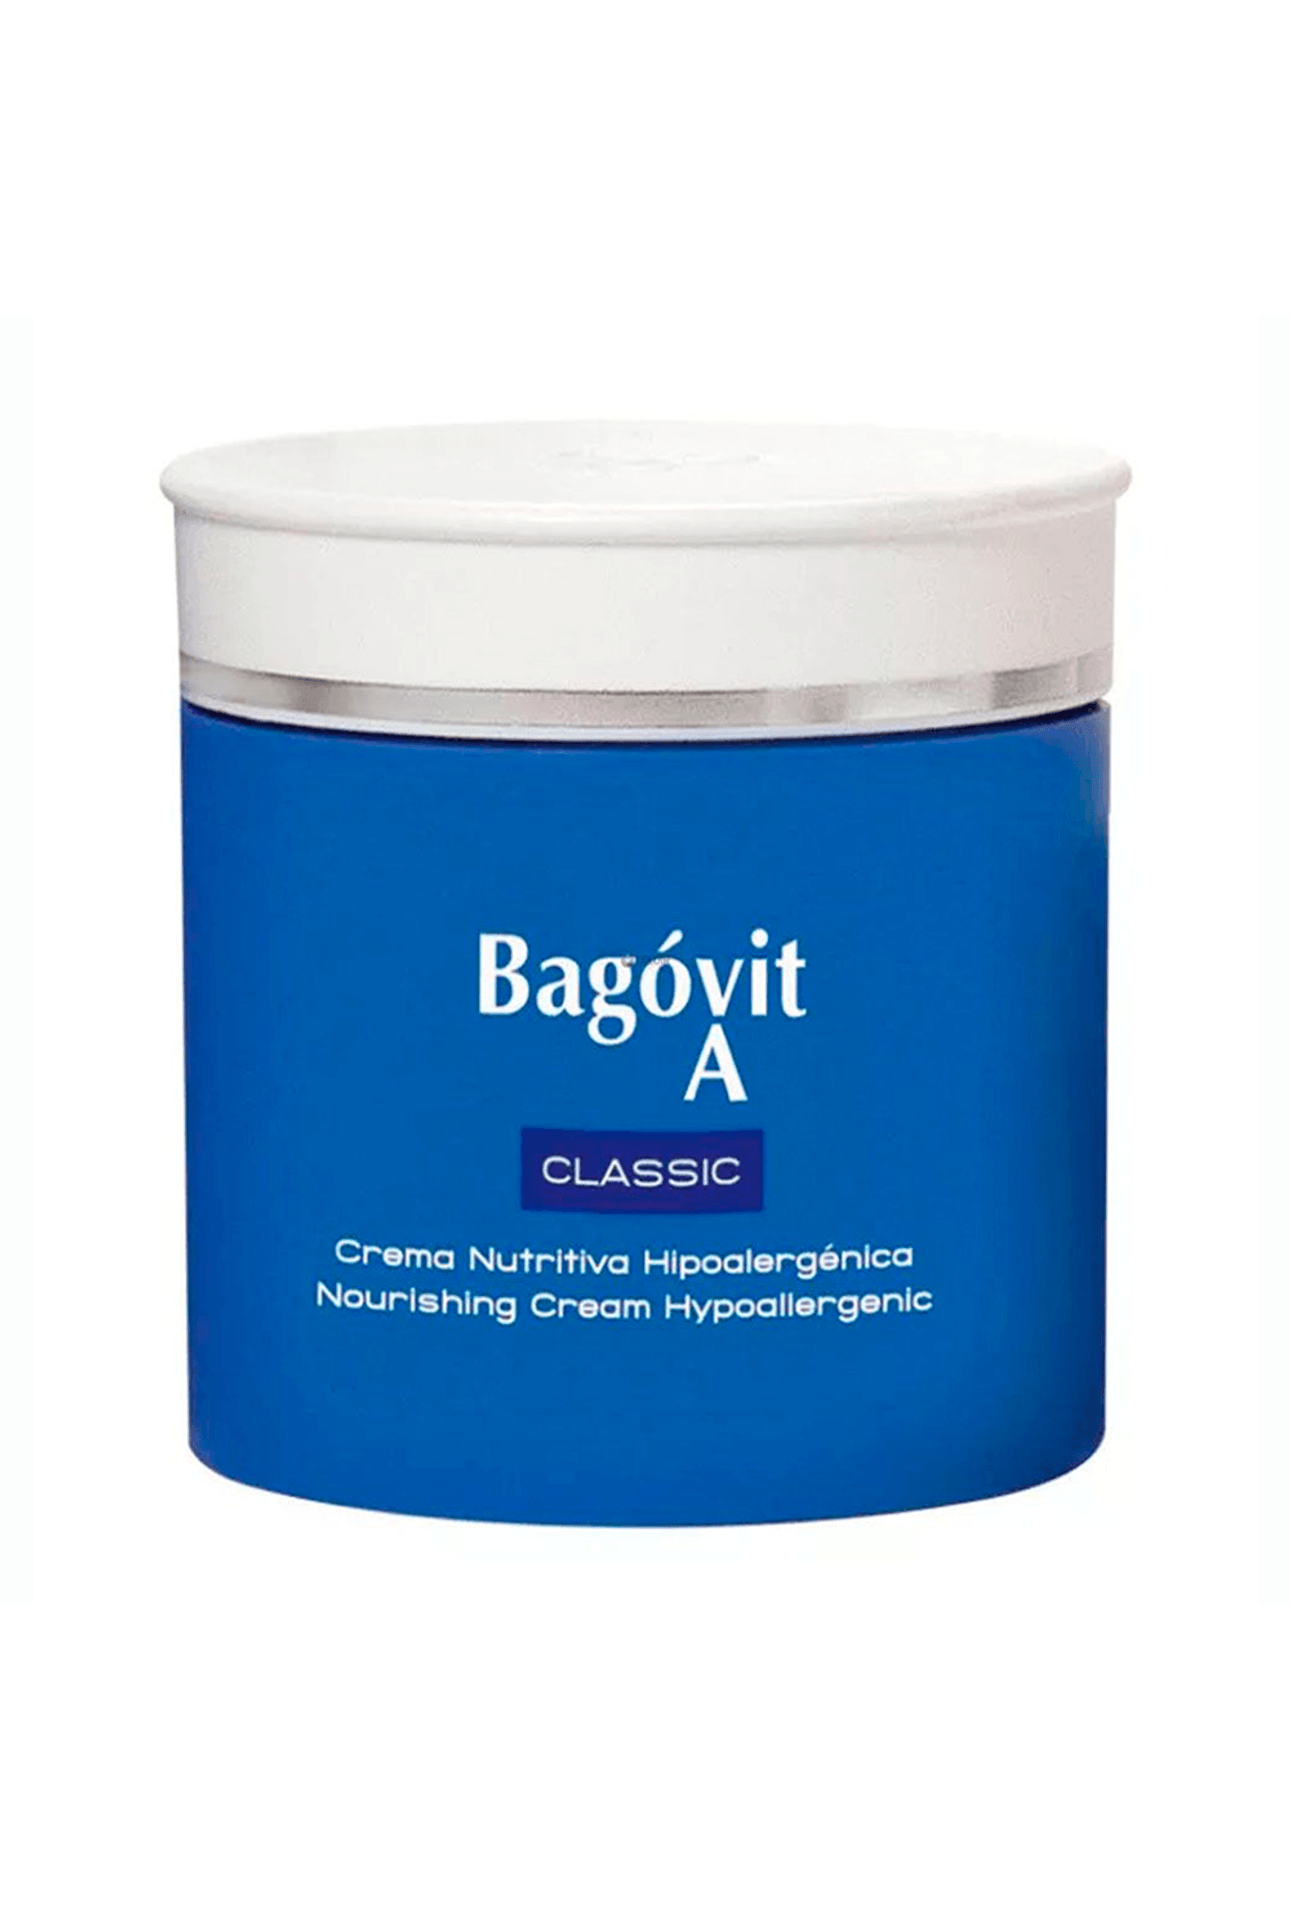 Bagovit-A Crema Nutritiva Classic x 200 gr-7790375245054